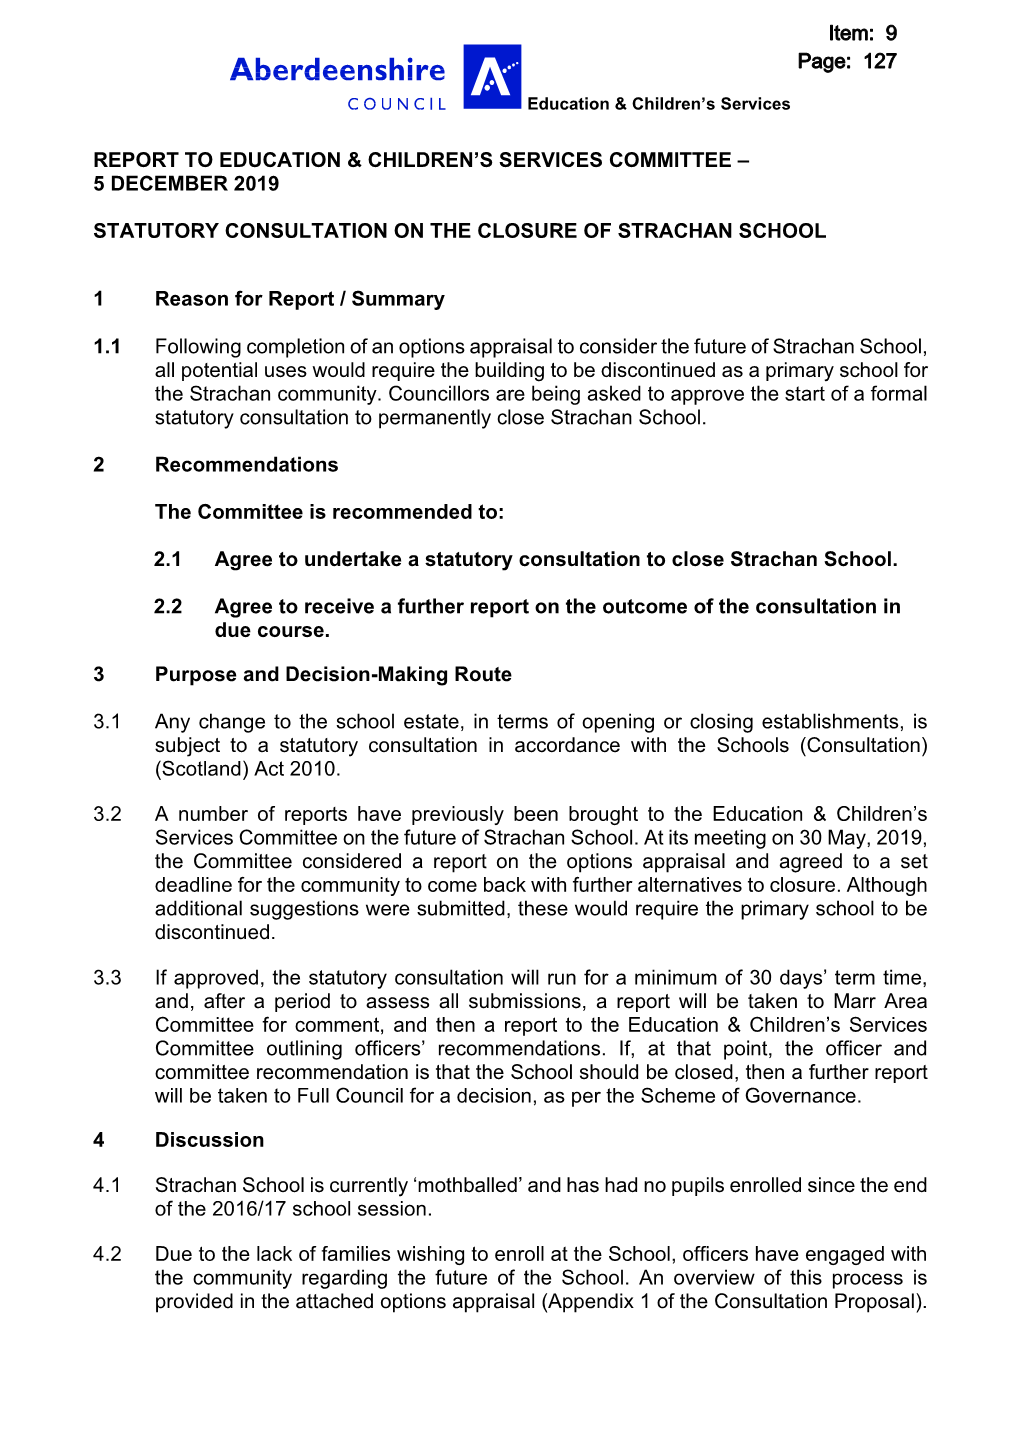 Statutory Consultation on the Closure of Strachan School